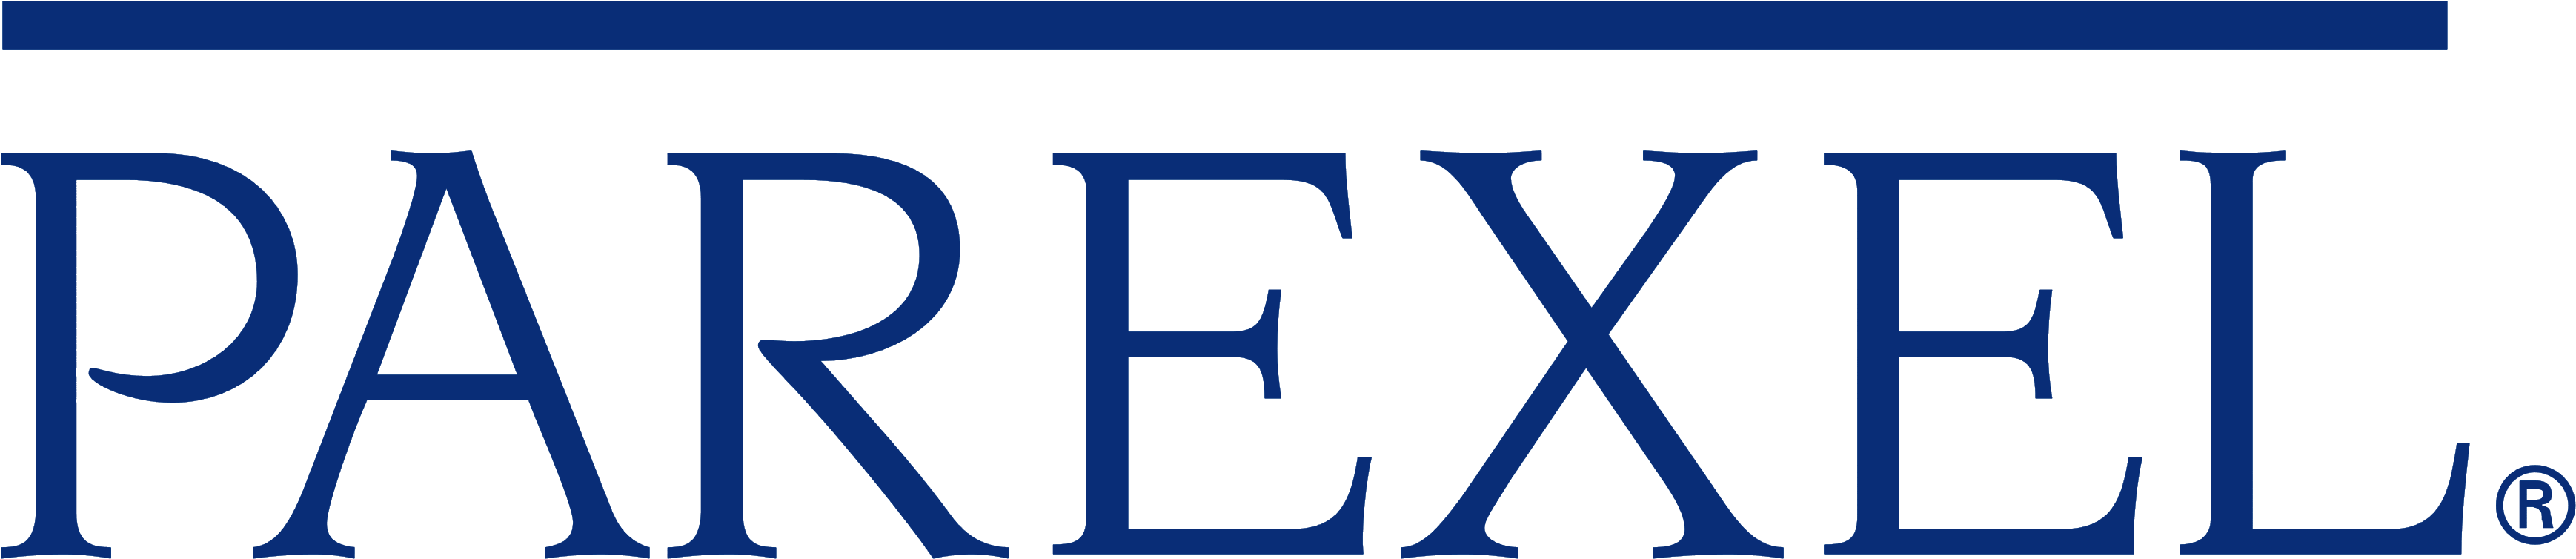 Merck Logo Transparent - Parexel Logo Png Clipart (3652x800), Png Download